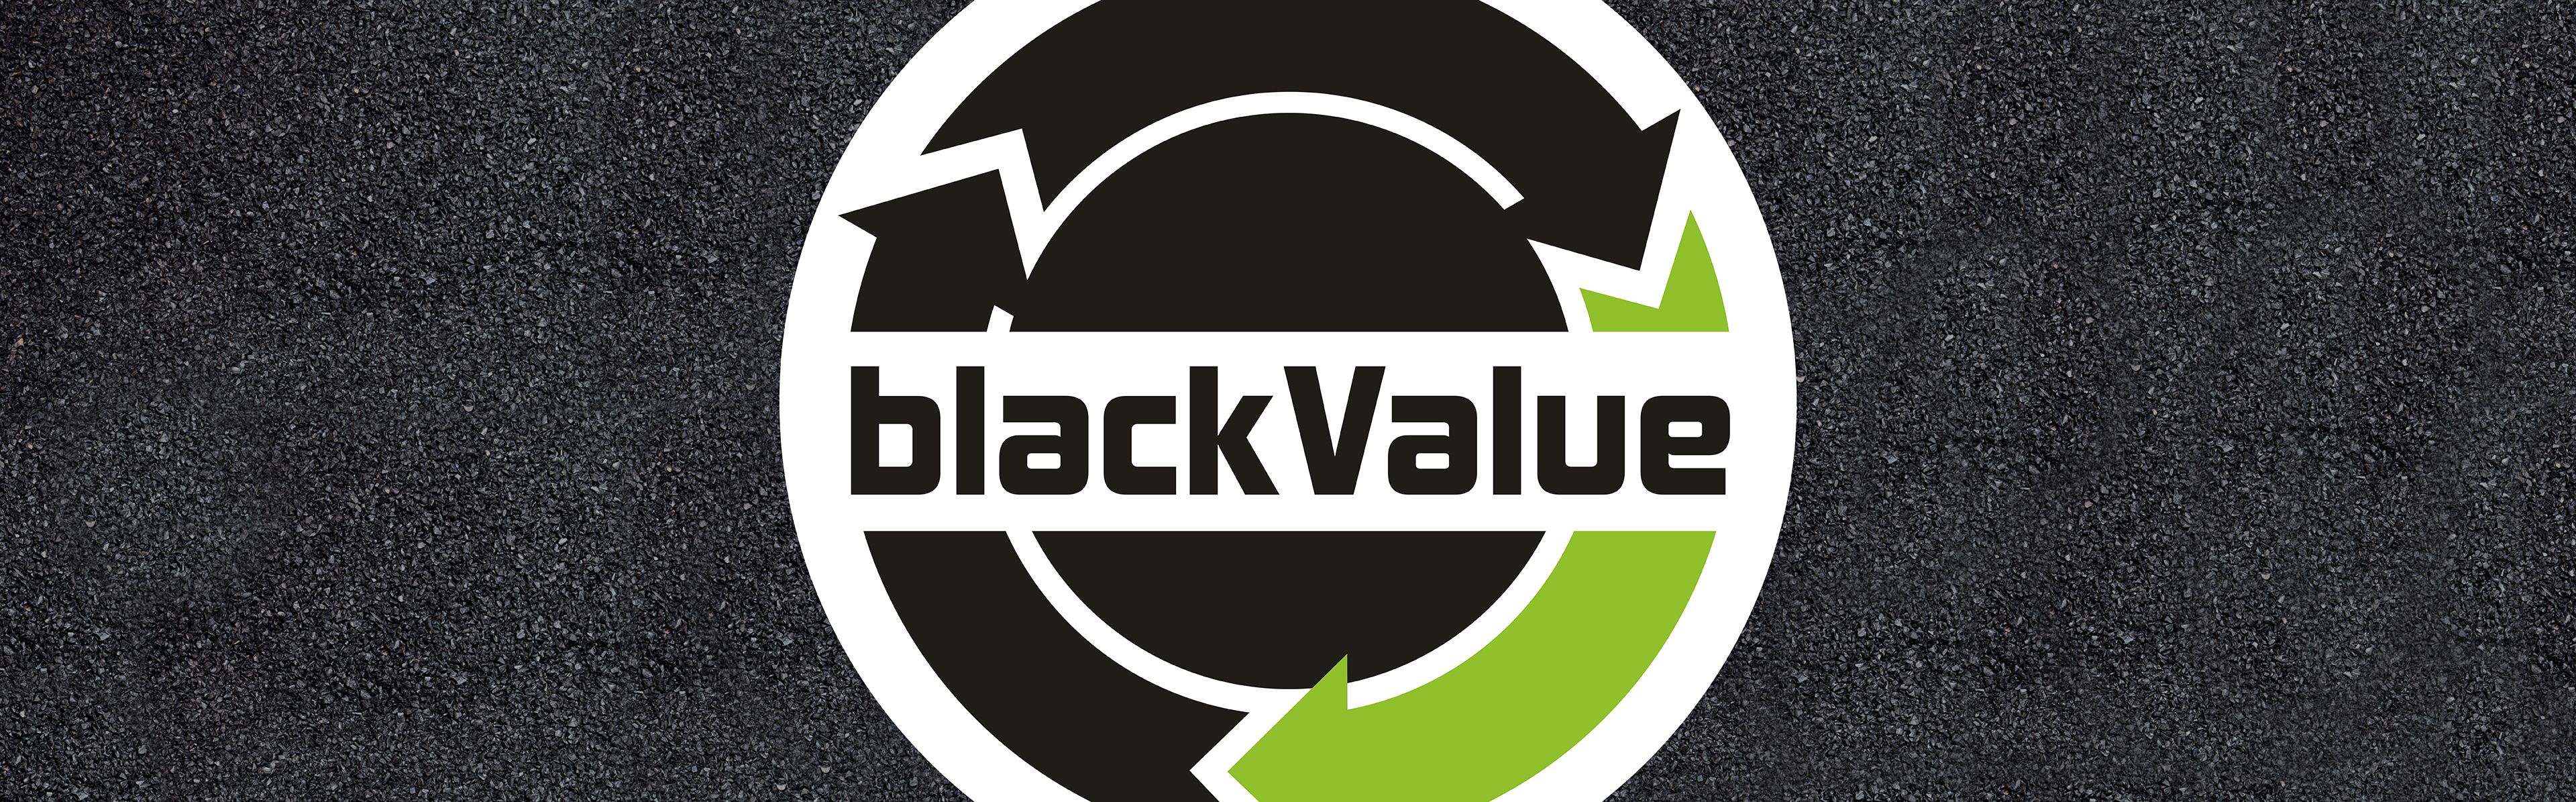 blackValue logo